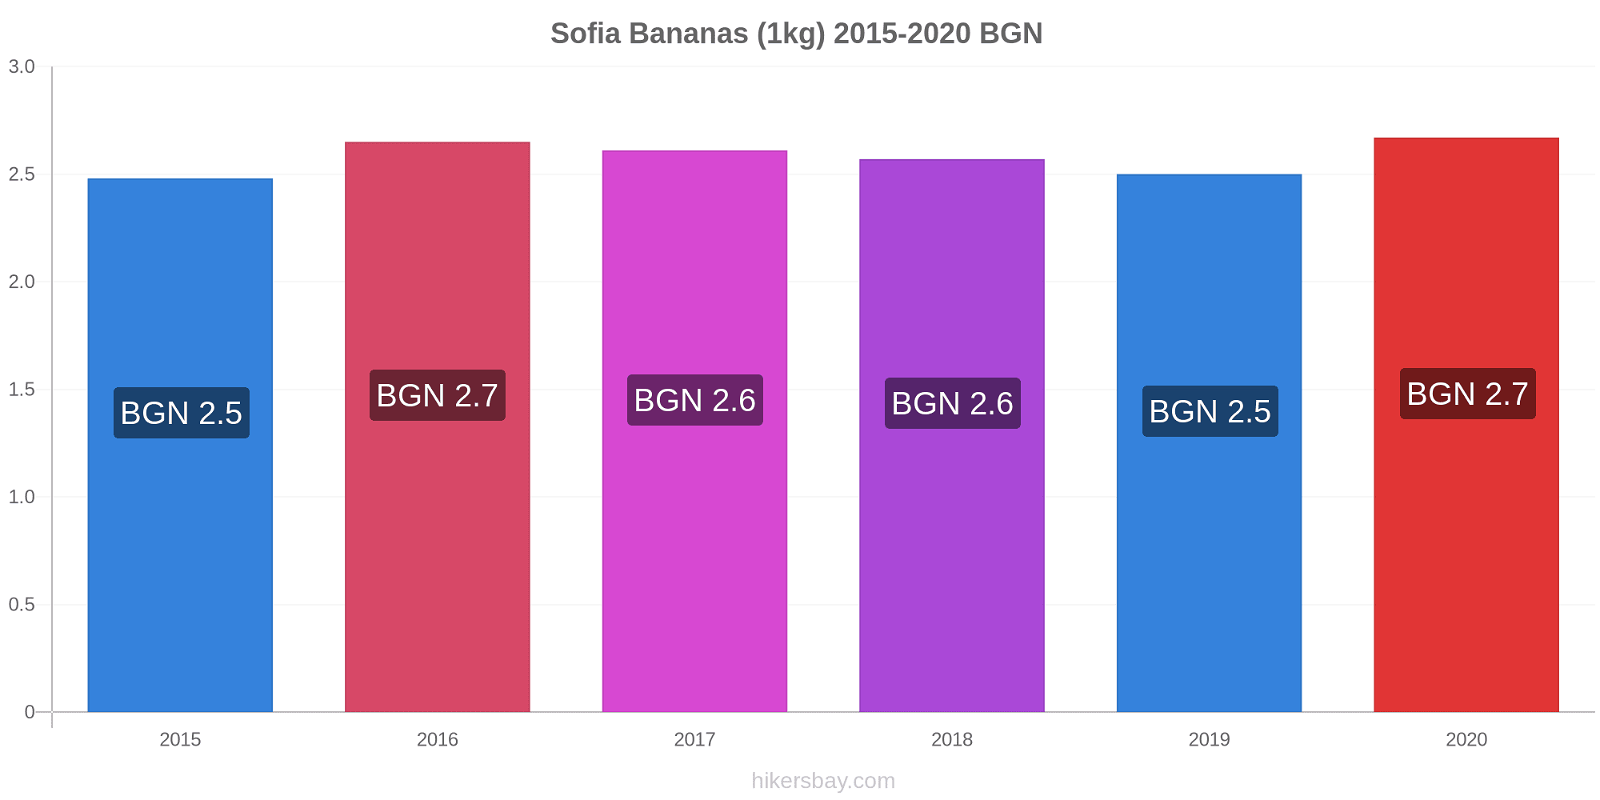 Sofia price changes Bananas (1kg) hikersbay.com